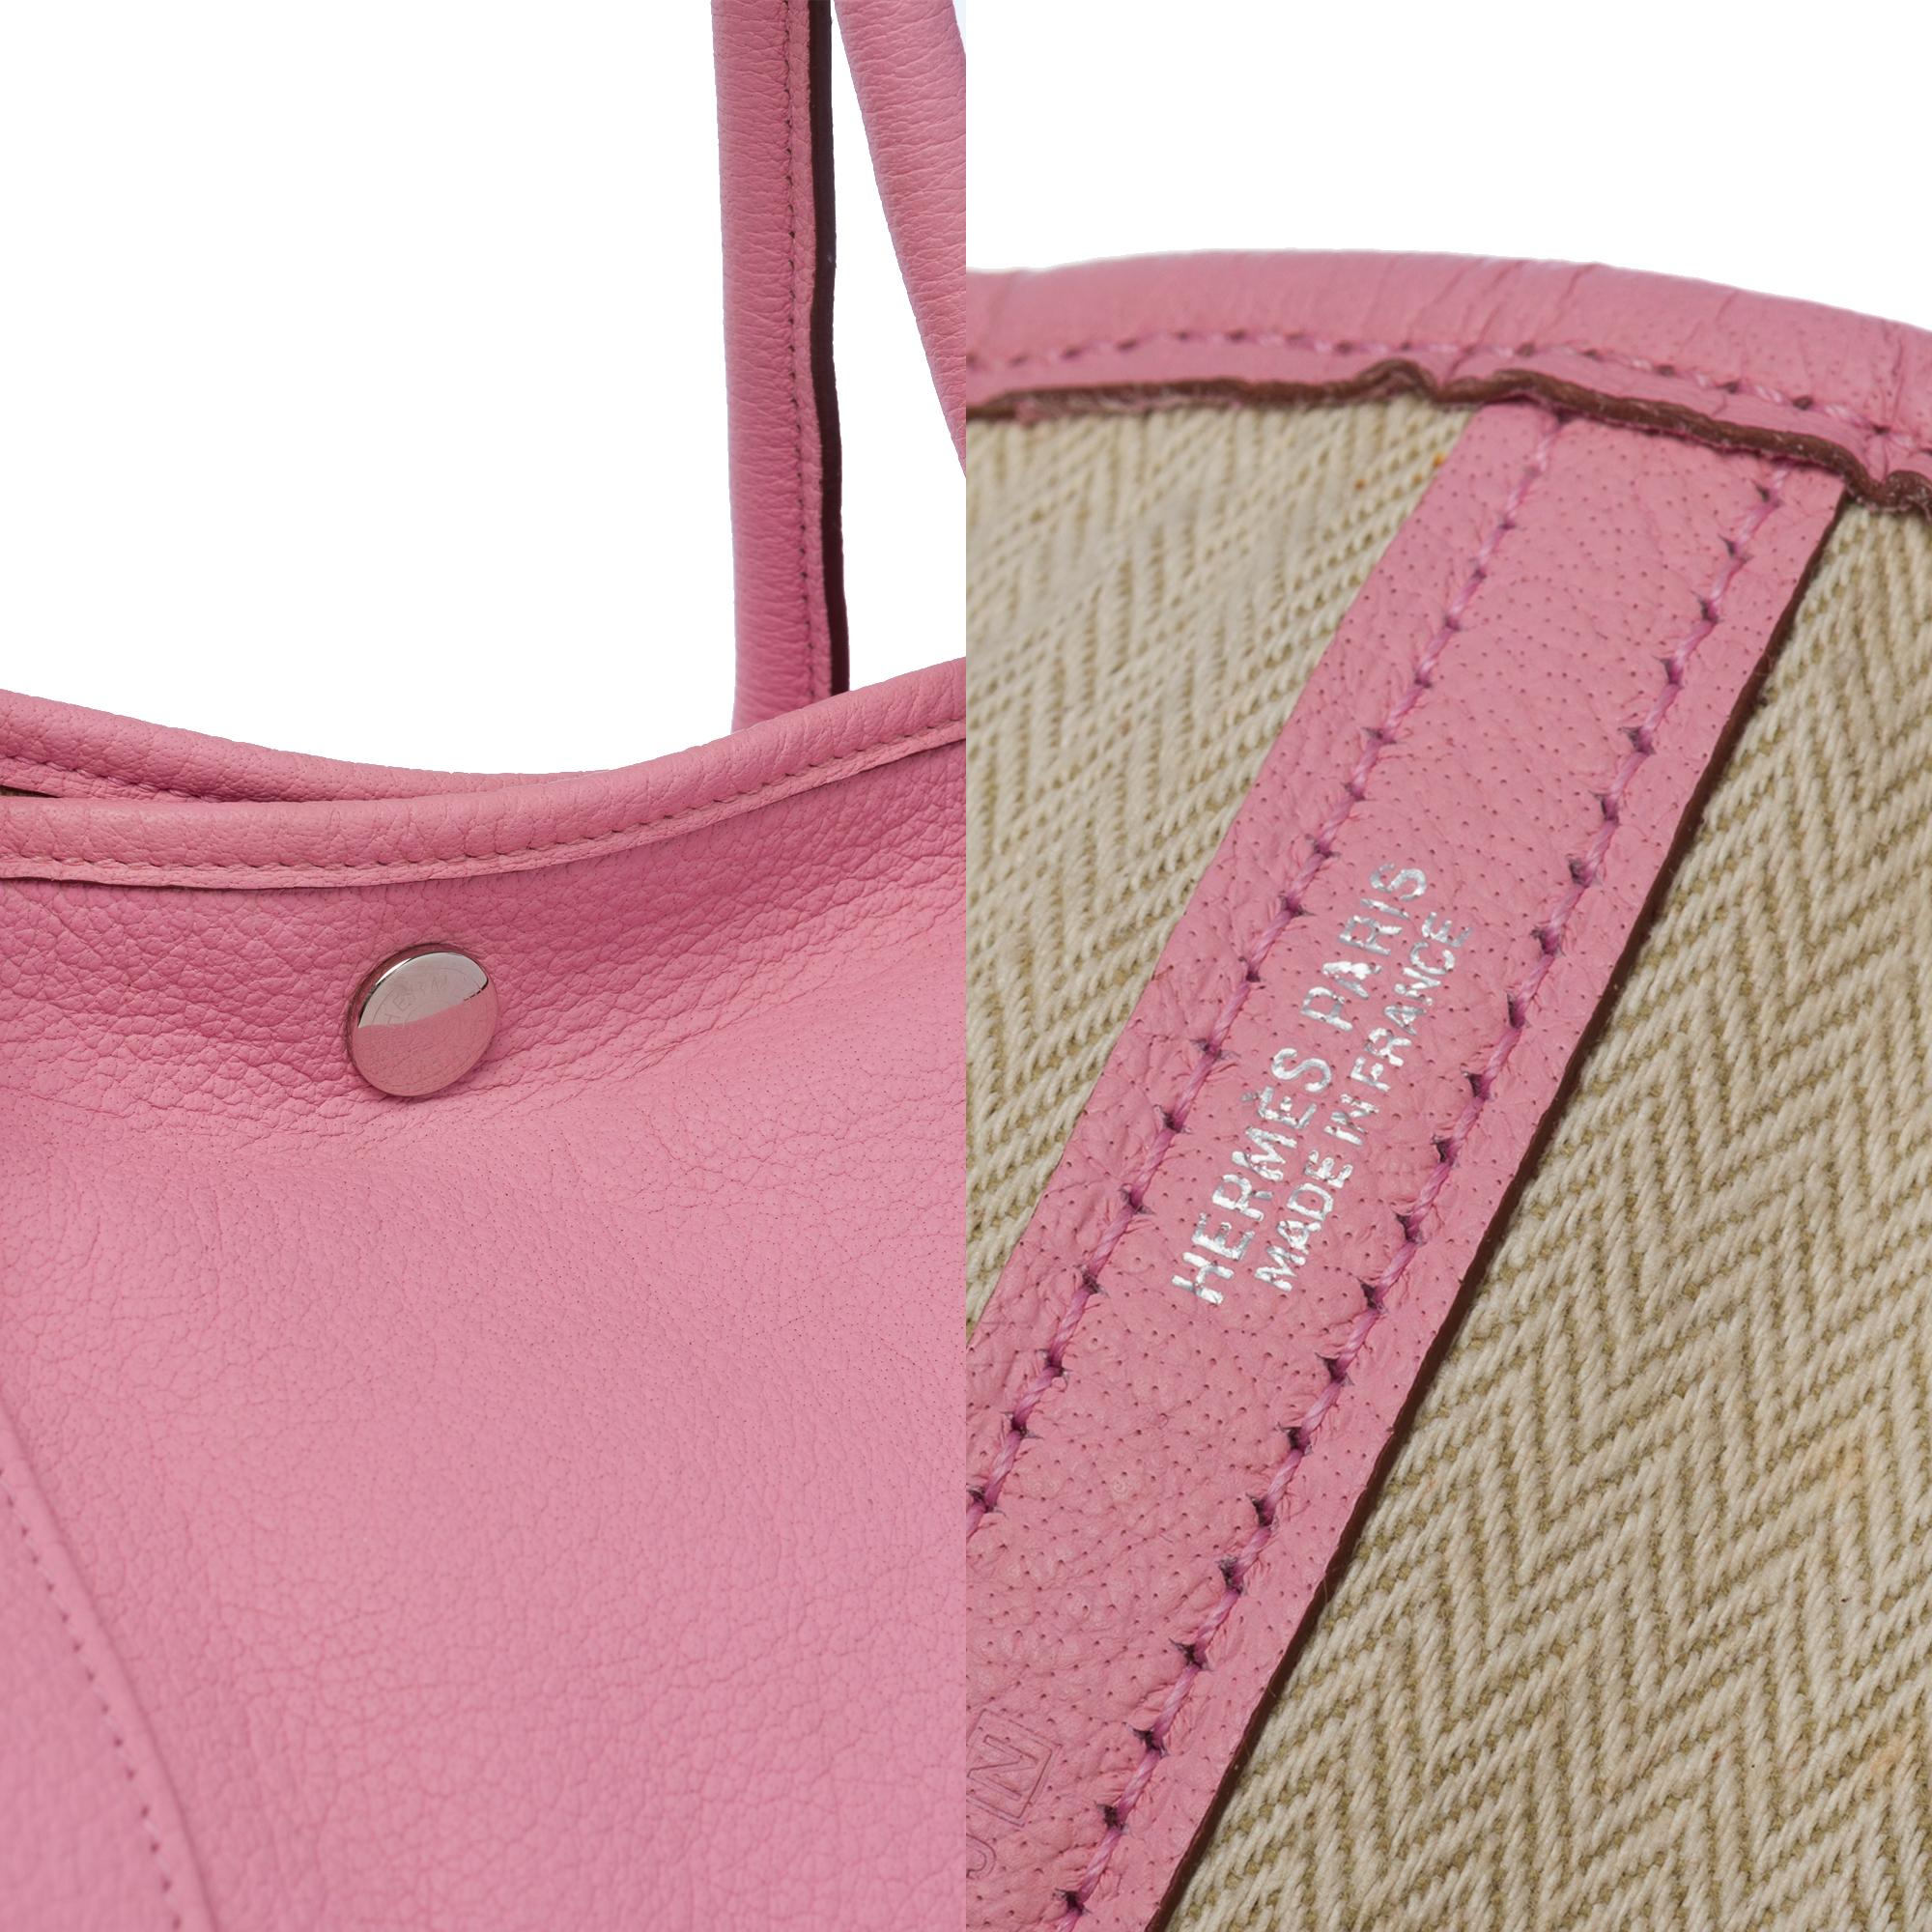 Gorgeous Hermès Garden Party 36 Tote bag in Sakura Pink Negonda leather, SHW 1